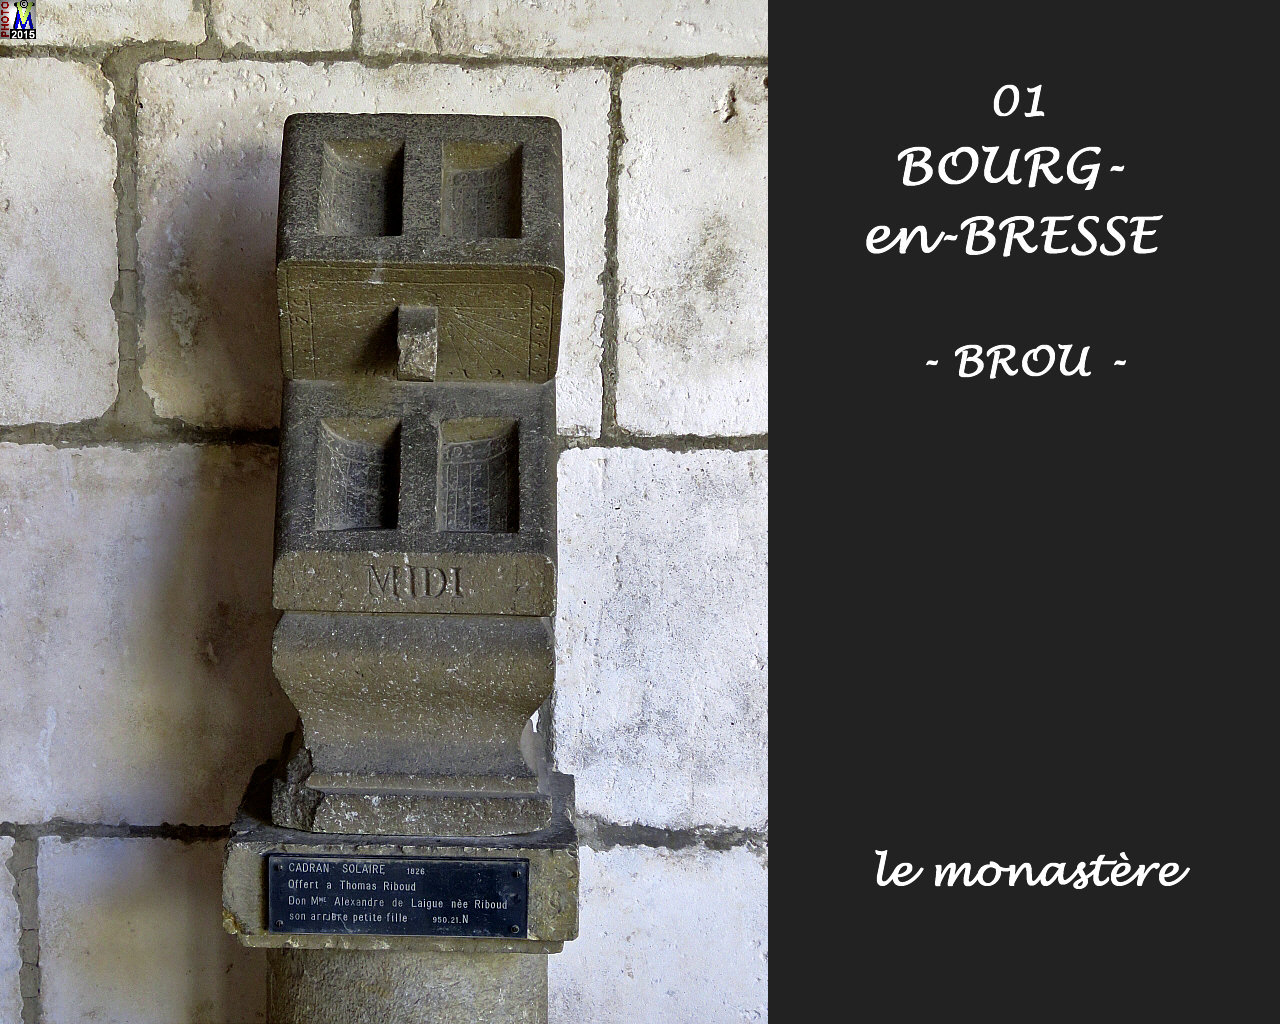 01BOURG-BRESSEzBROU_monastere_268.jpg